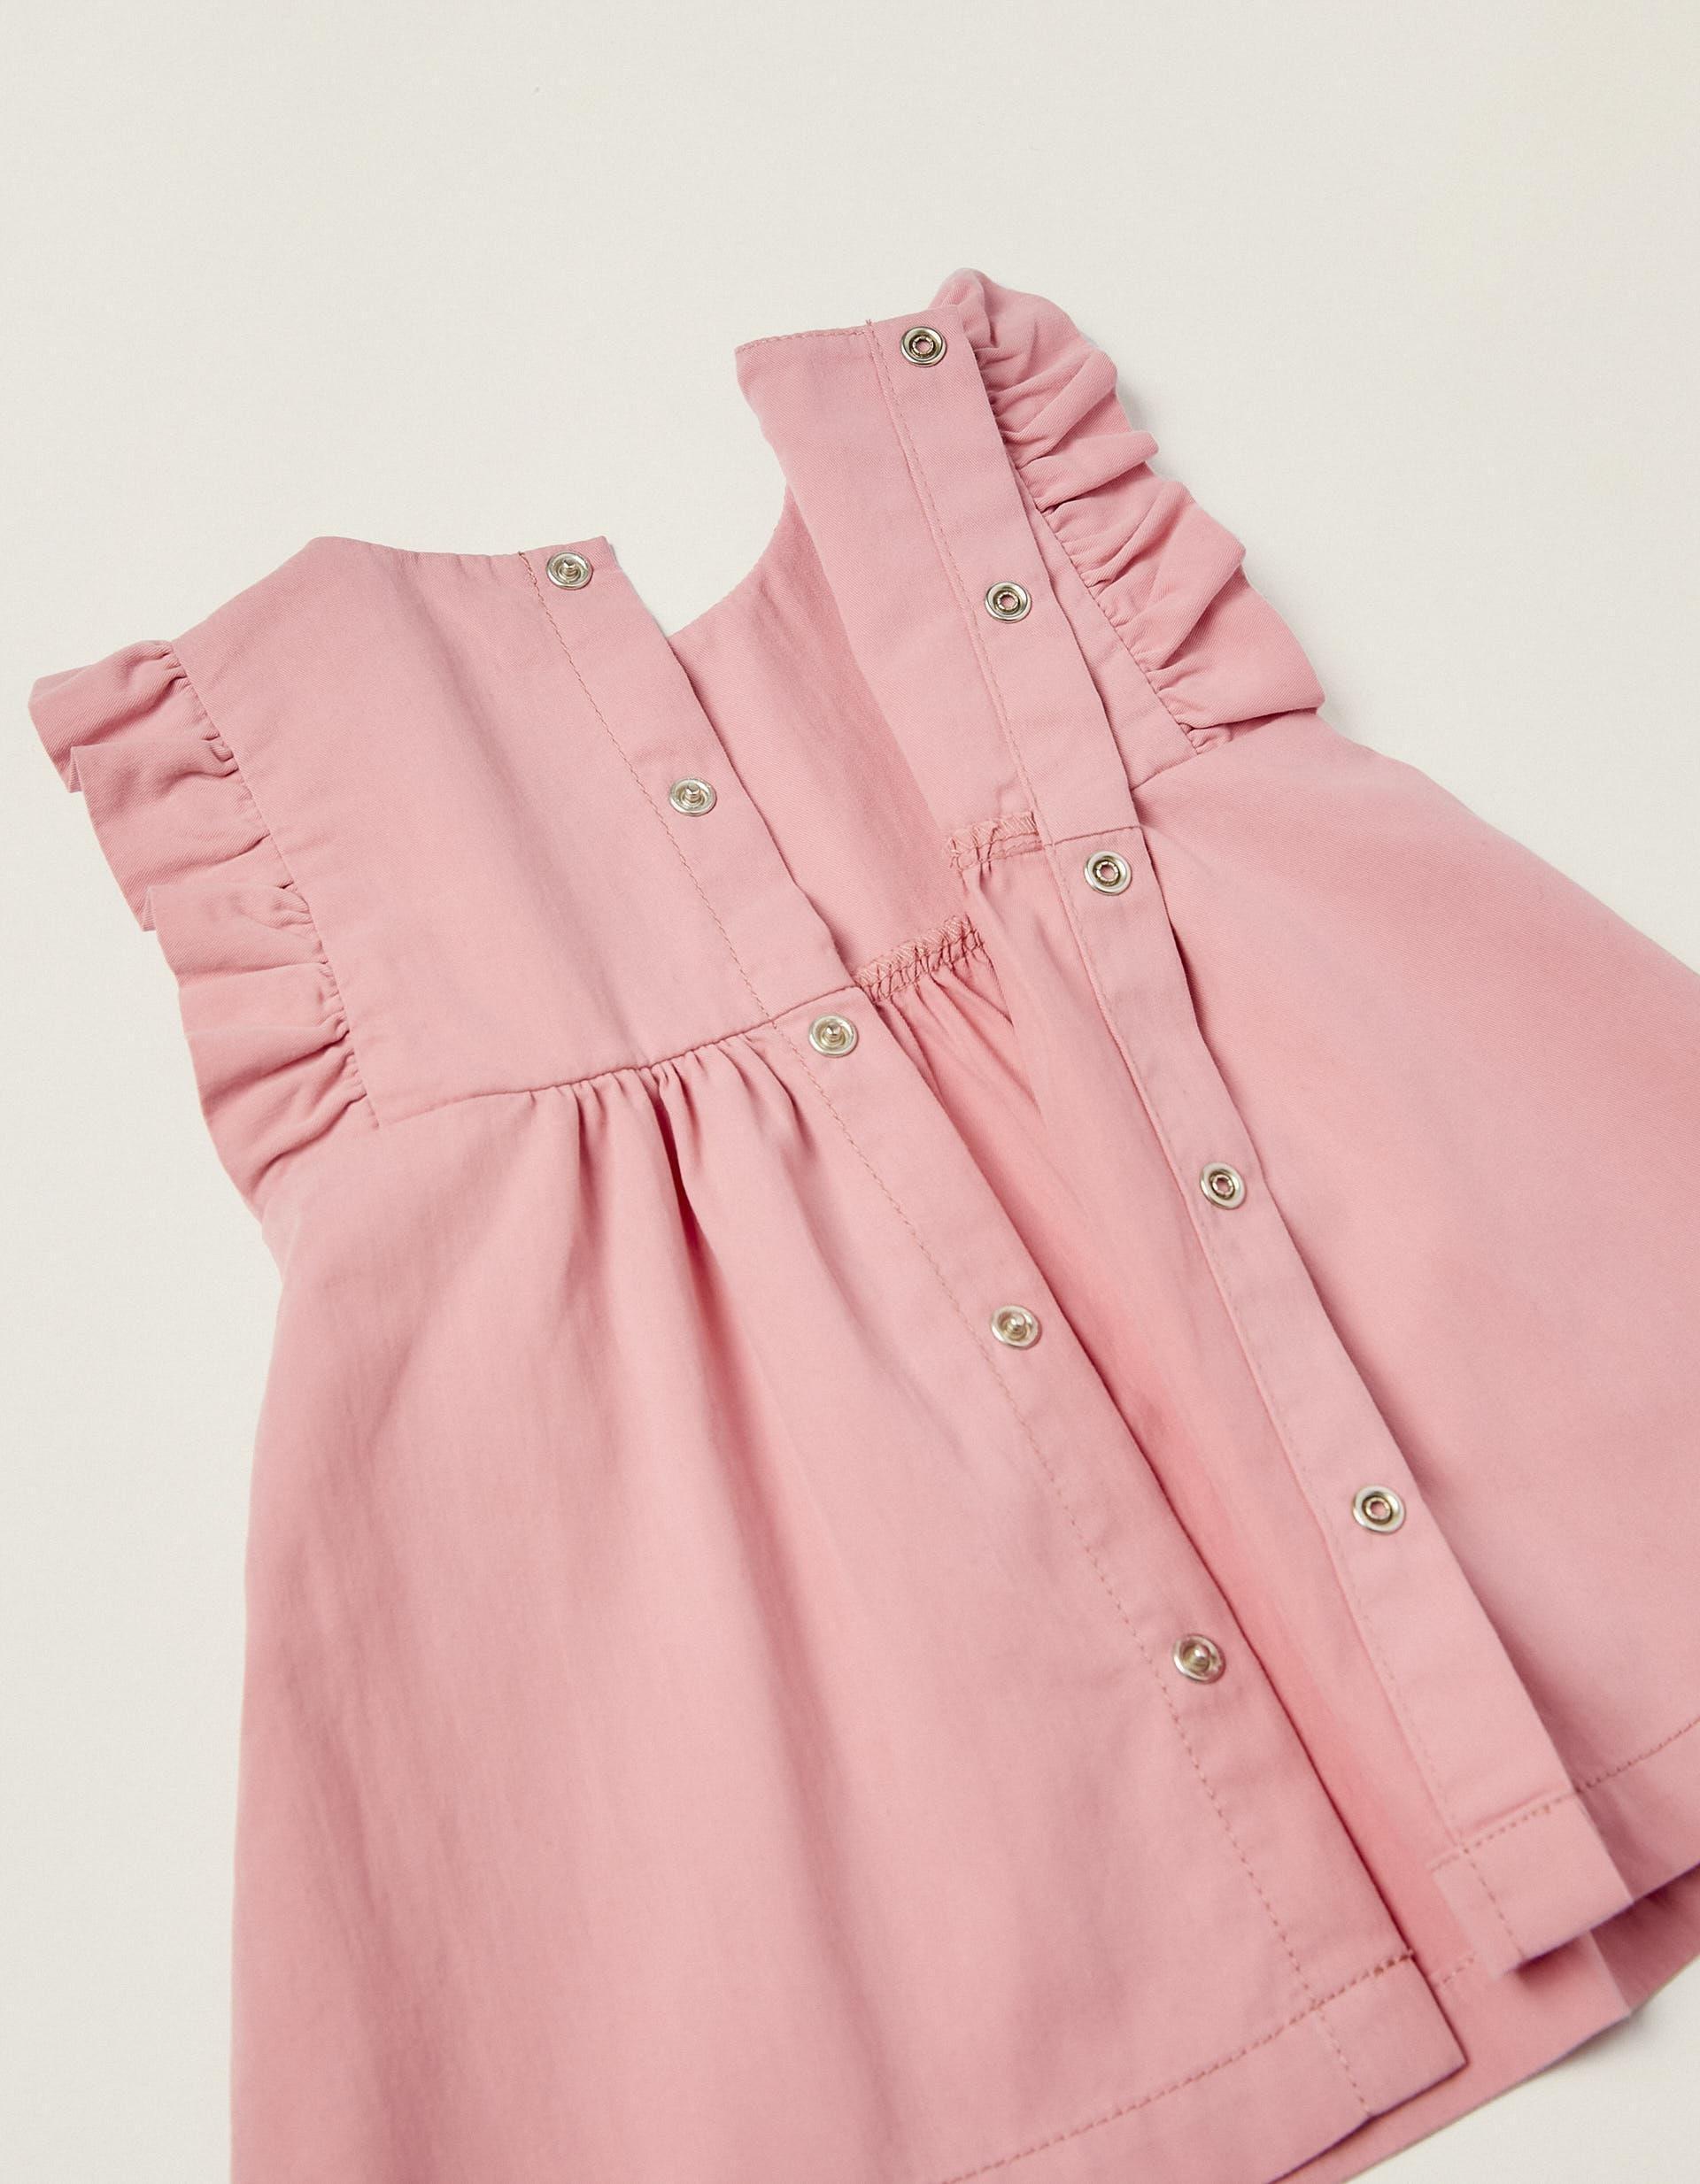 Zippy - Pink Ruffled Twill Dress, Baby Girls